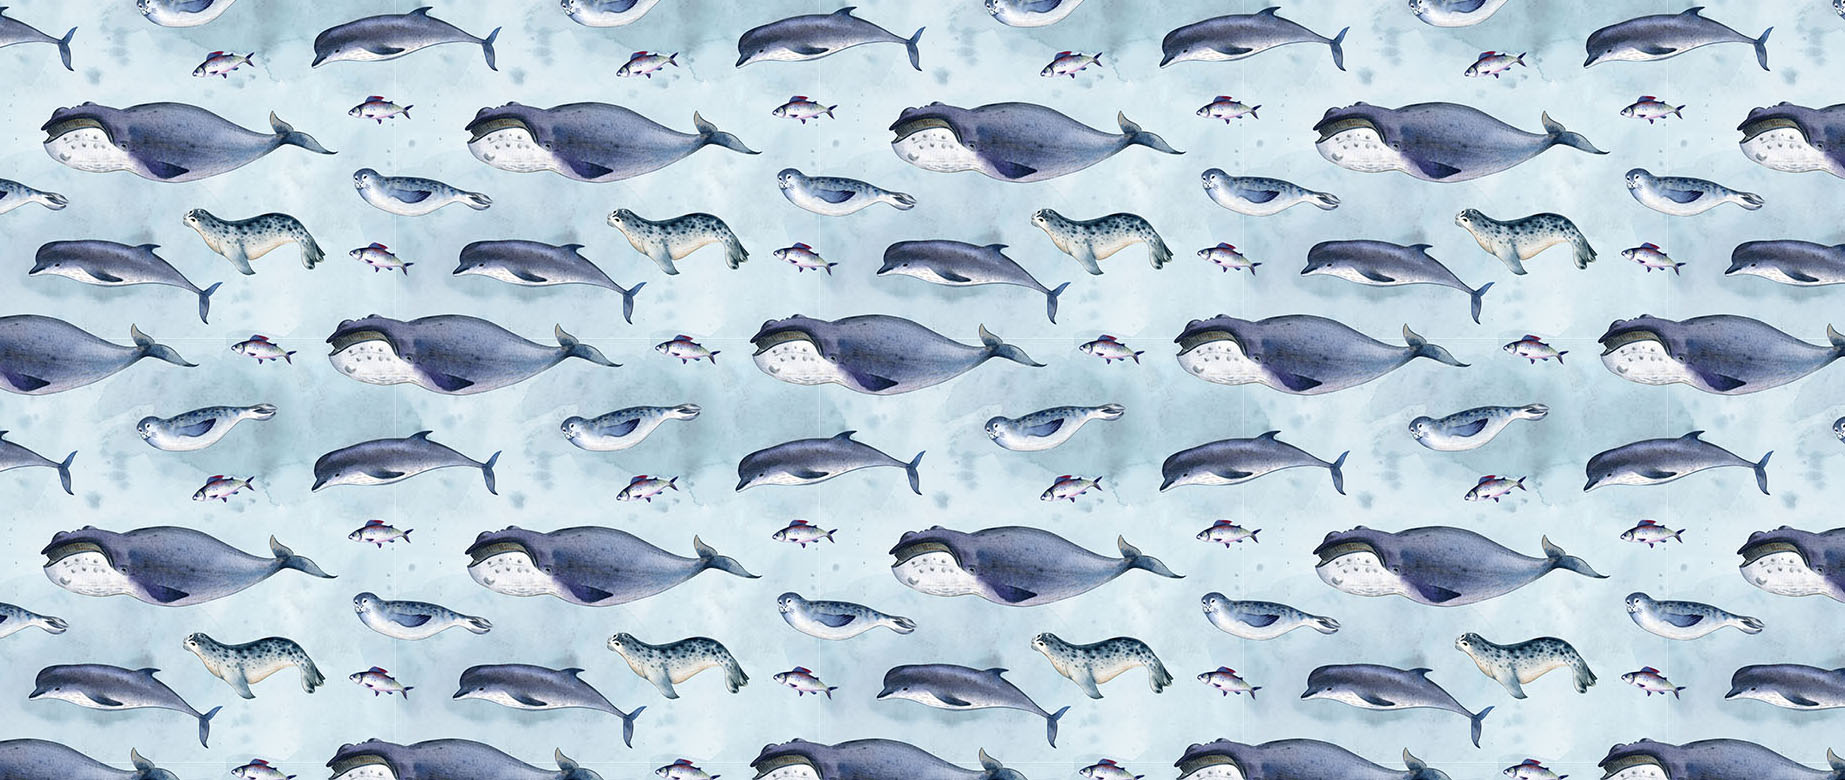 whale-seal-fish-in-ocean-drawing-wallpaper-seamless-repeat-view